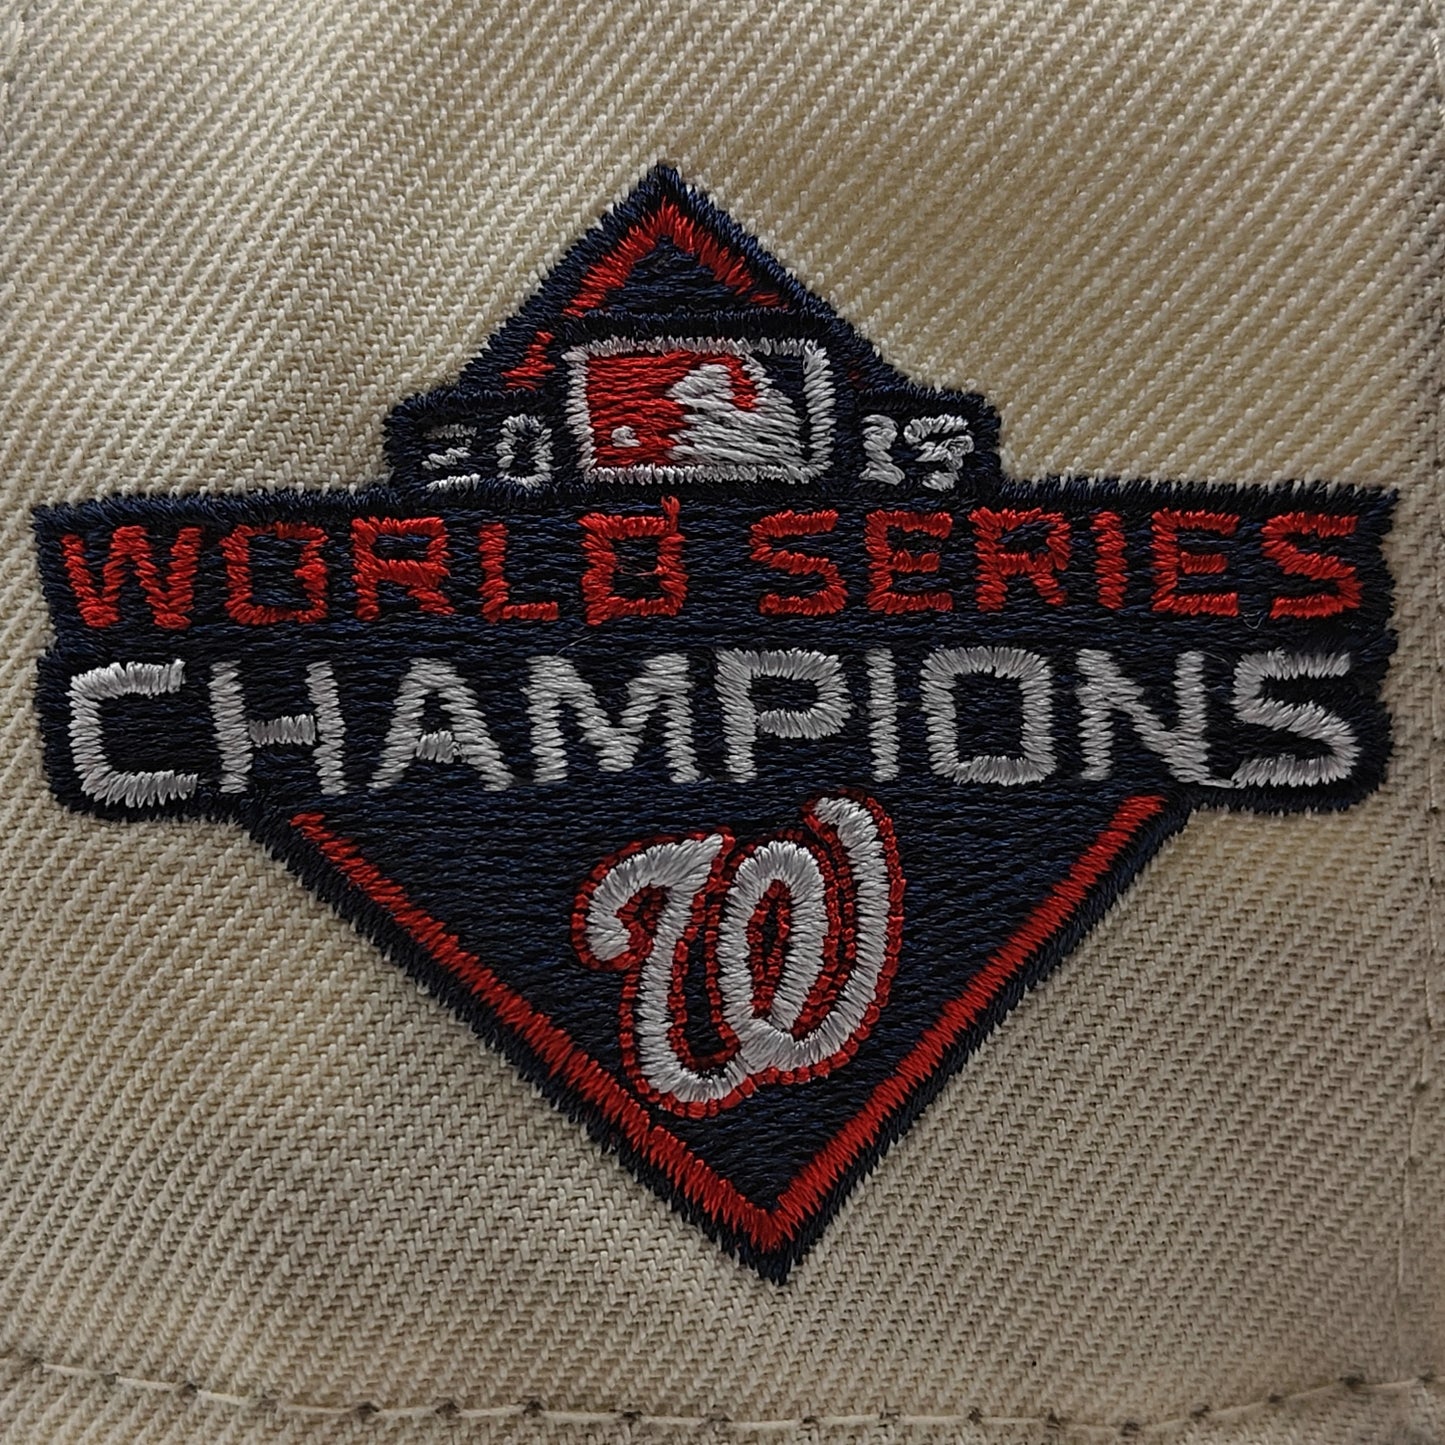 2019 MLB World Series Washington Nationals Championship Patch